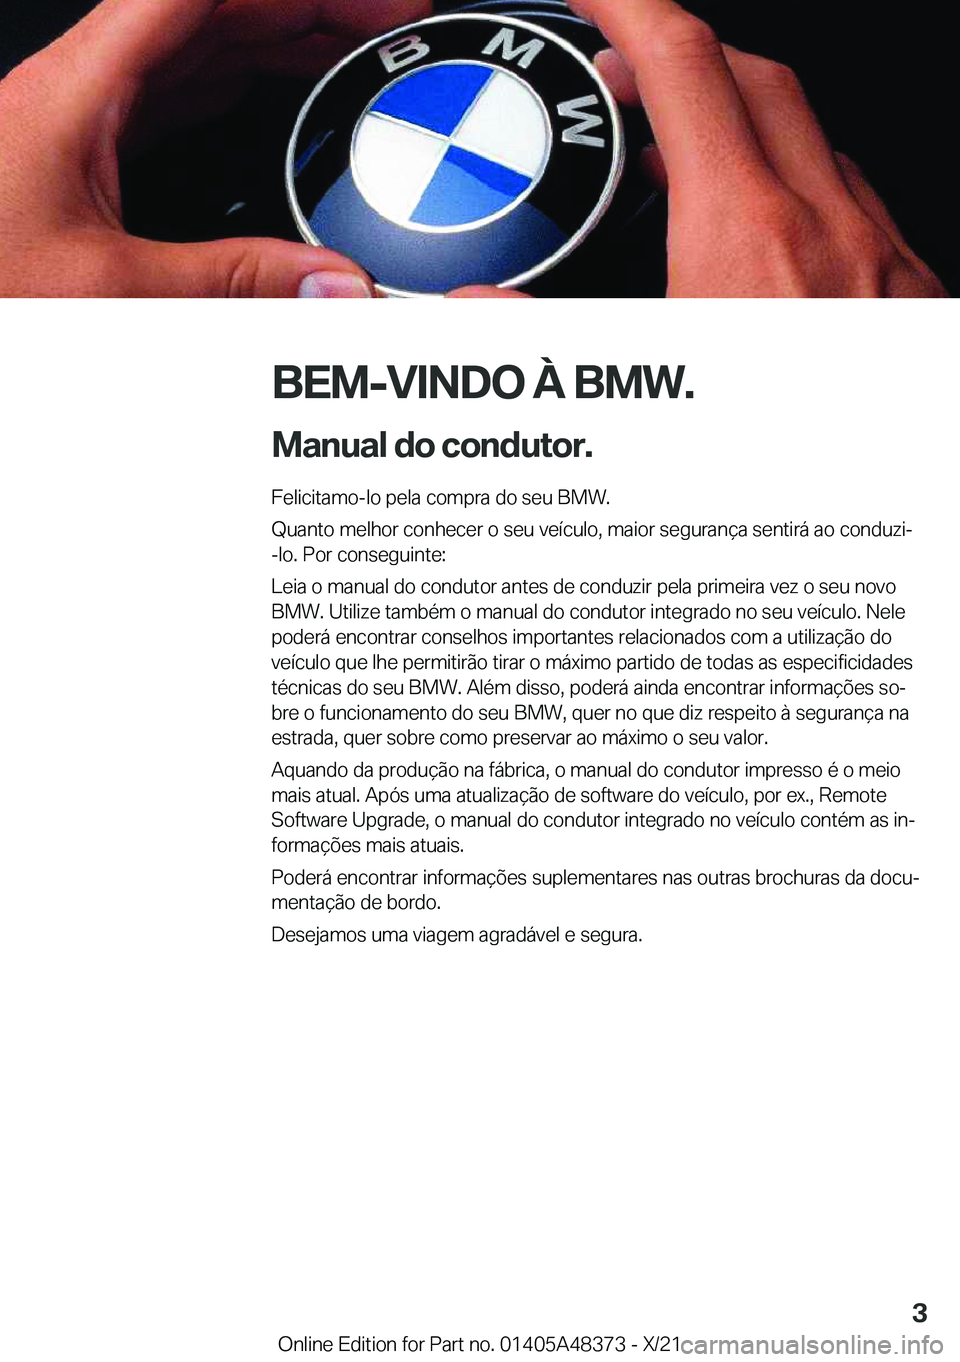 BMW X4 2022  Manual do condutor (in Portuguese) �B�E�M�-�V�I�N�D�O��À��B�M�W�.
�M�a�n�u�a�l��d�o��c�o�n�d�u�t�o�r�. �F�e�l�i�c�i�t�a�m�o�-�l�o��p�e�l�a��c�o�m�p�r�a��d�o��s�e�u��B�M�W�.
�Q�u�a�n�t�o��m�e�l�h�o�r��c�o�n�h�e�c�e�r��o��s